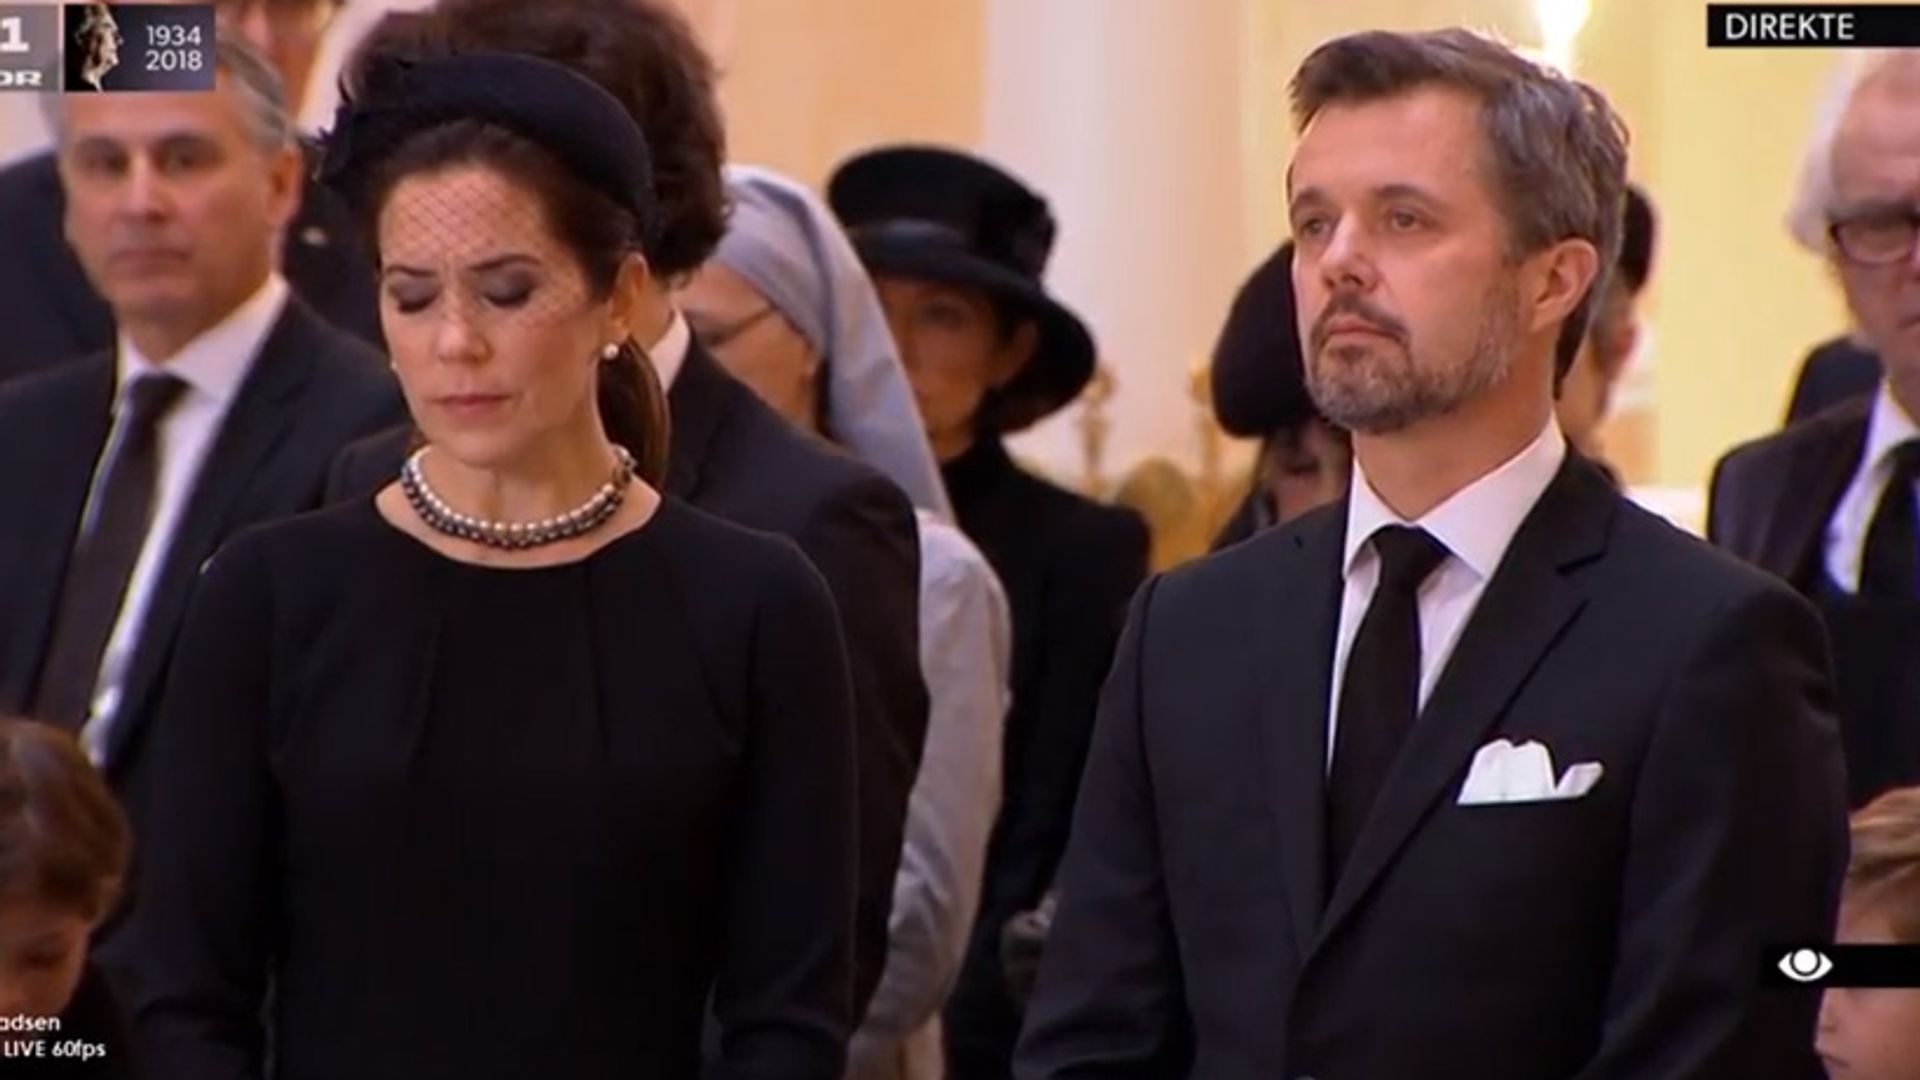 GALLERY: Emotional scenes from Prince Henrik's funeral